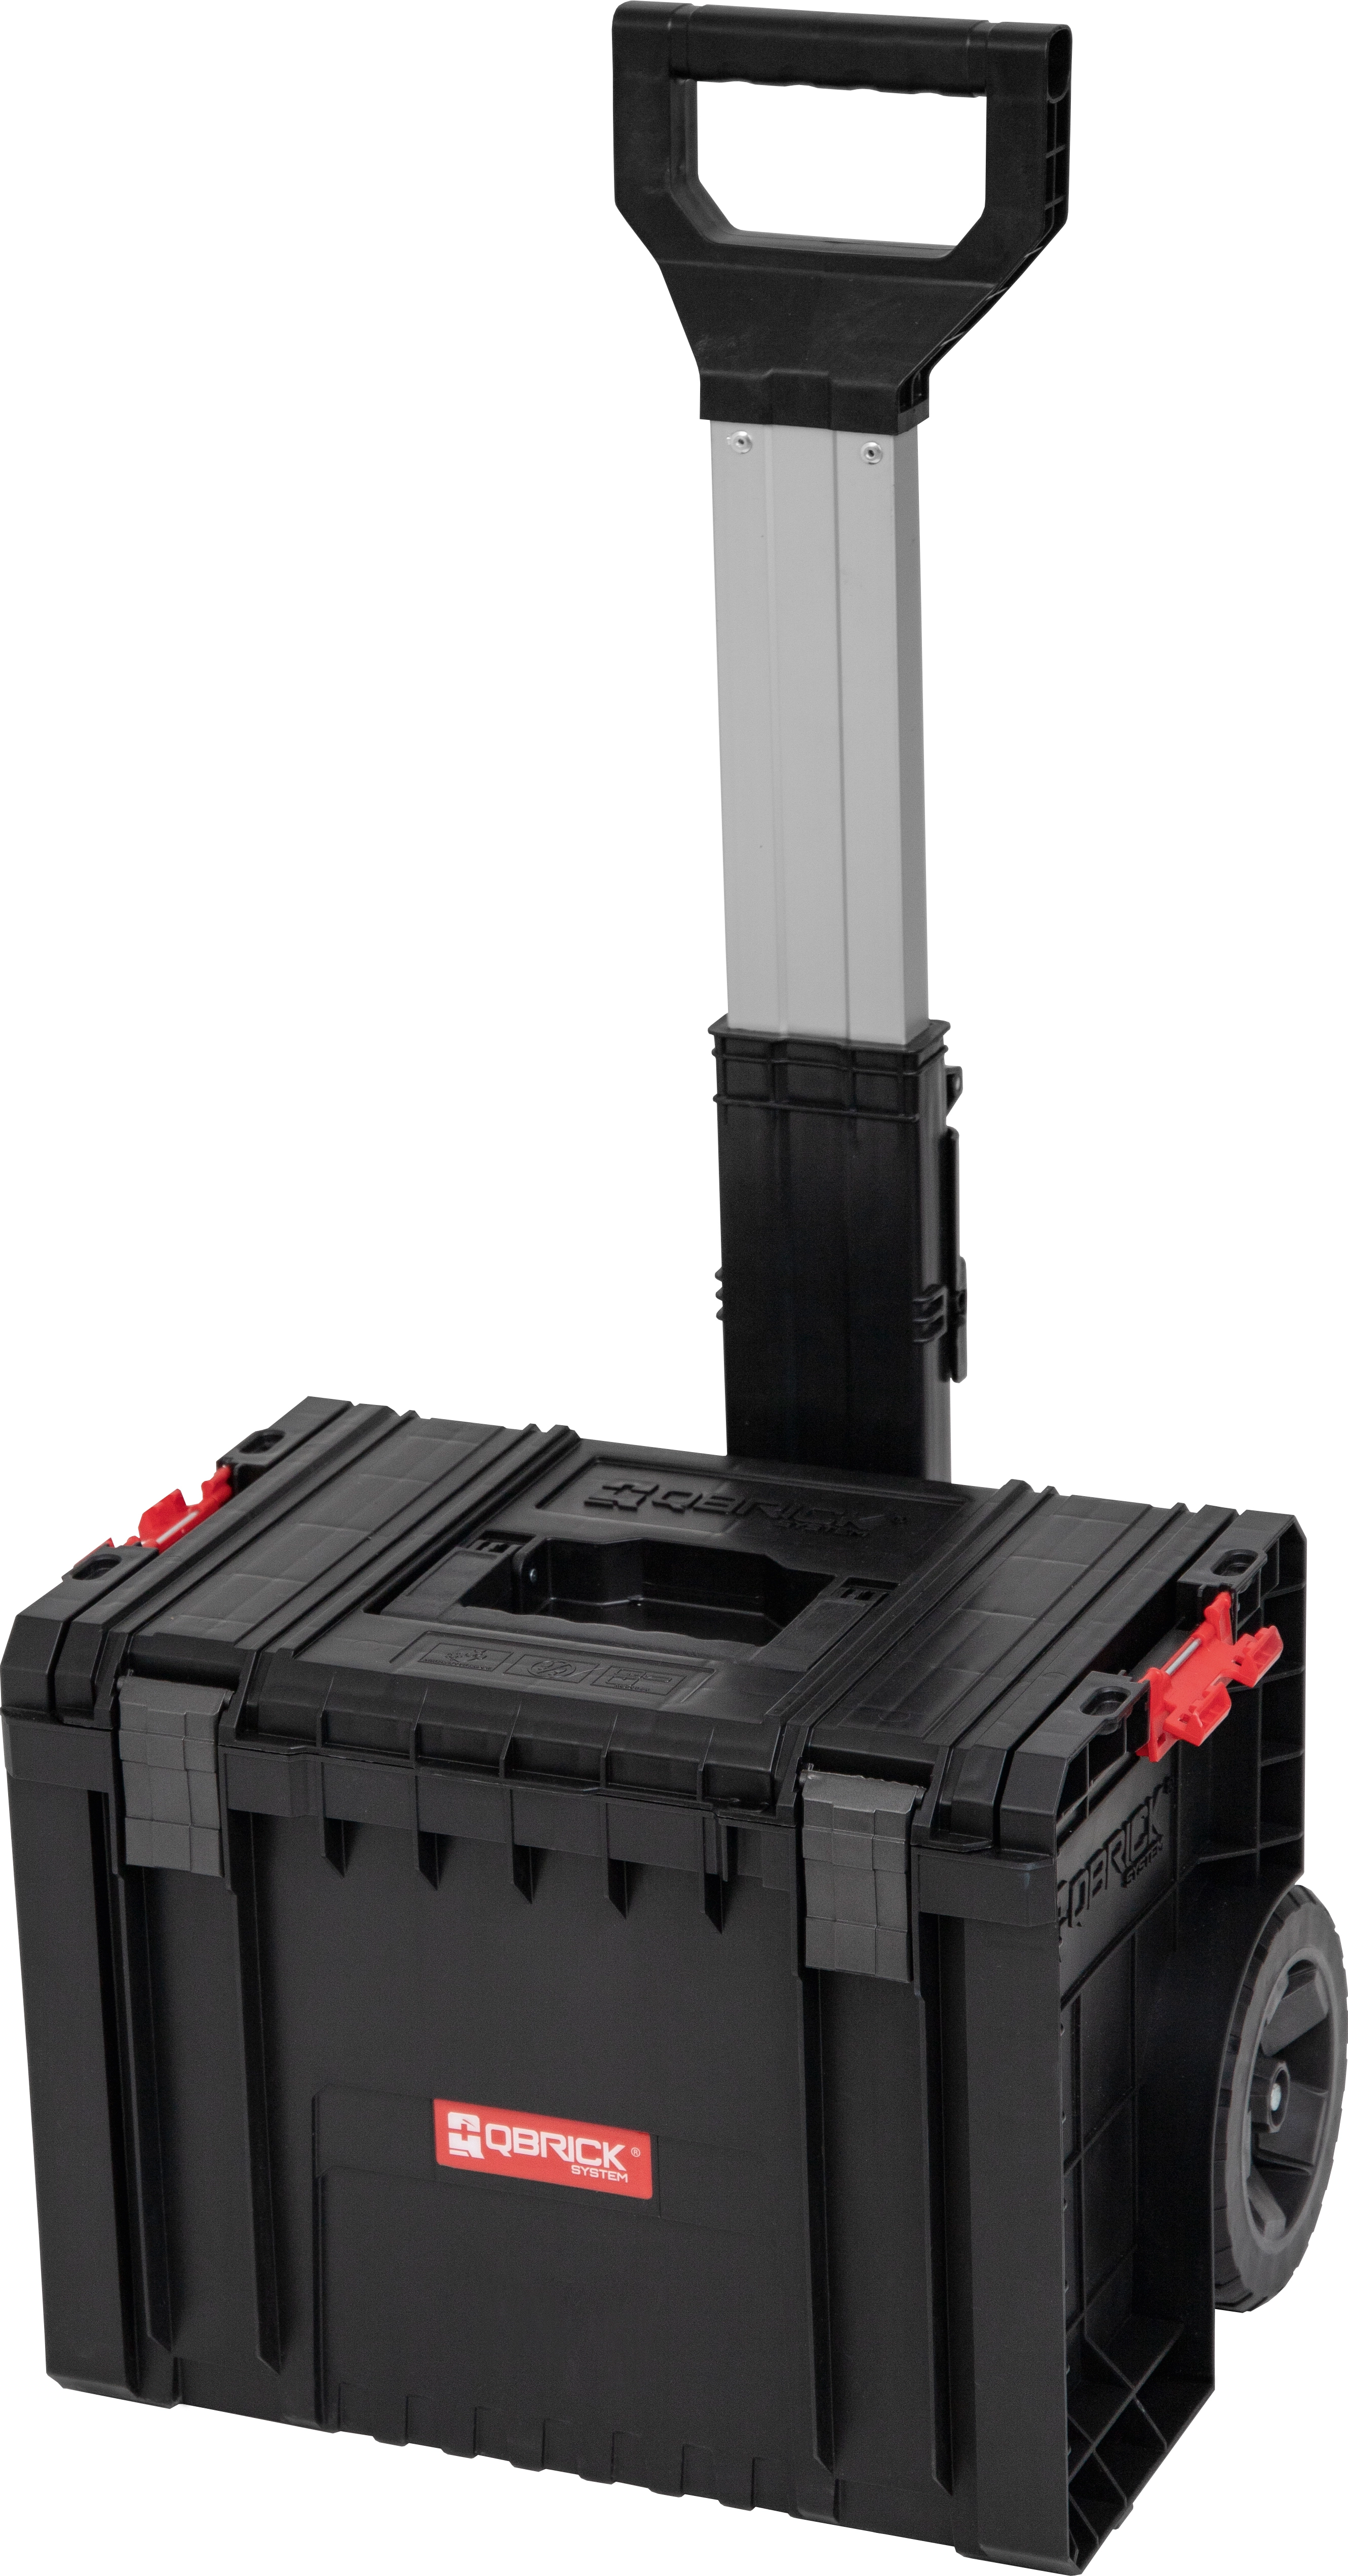 Qbrick System Pro Cart Werkzeugbox kaufen cm OBI 45 cm x 69 bei x 39 cm